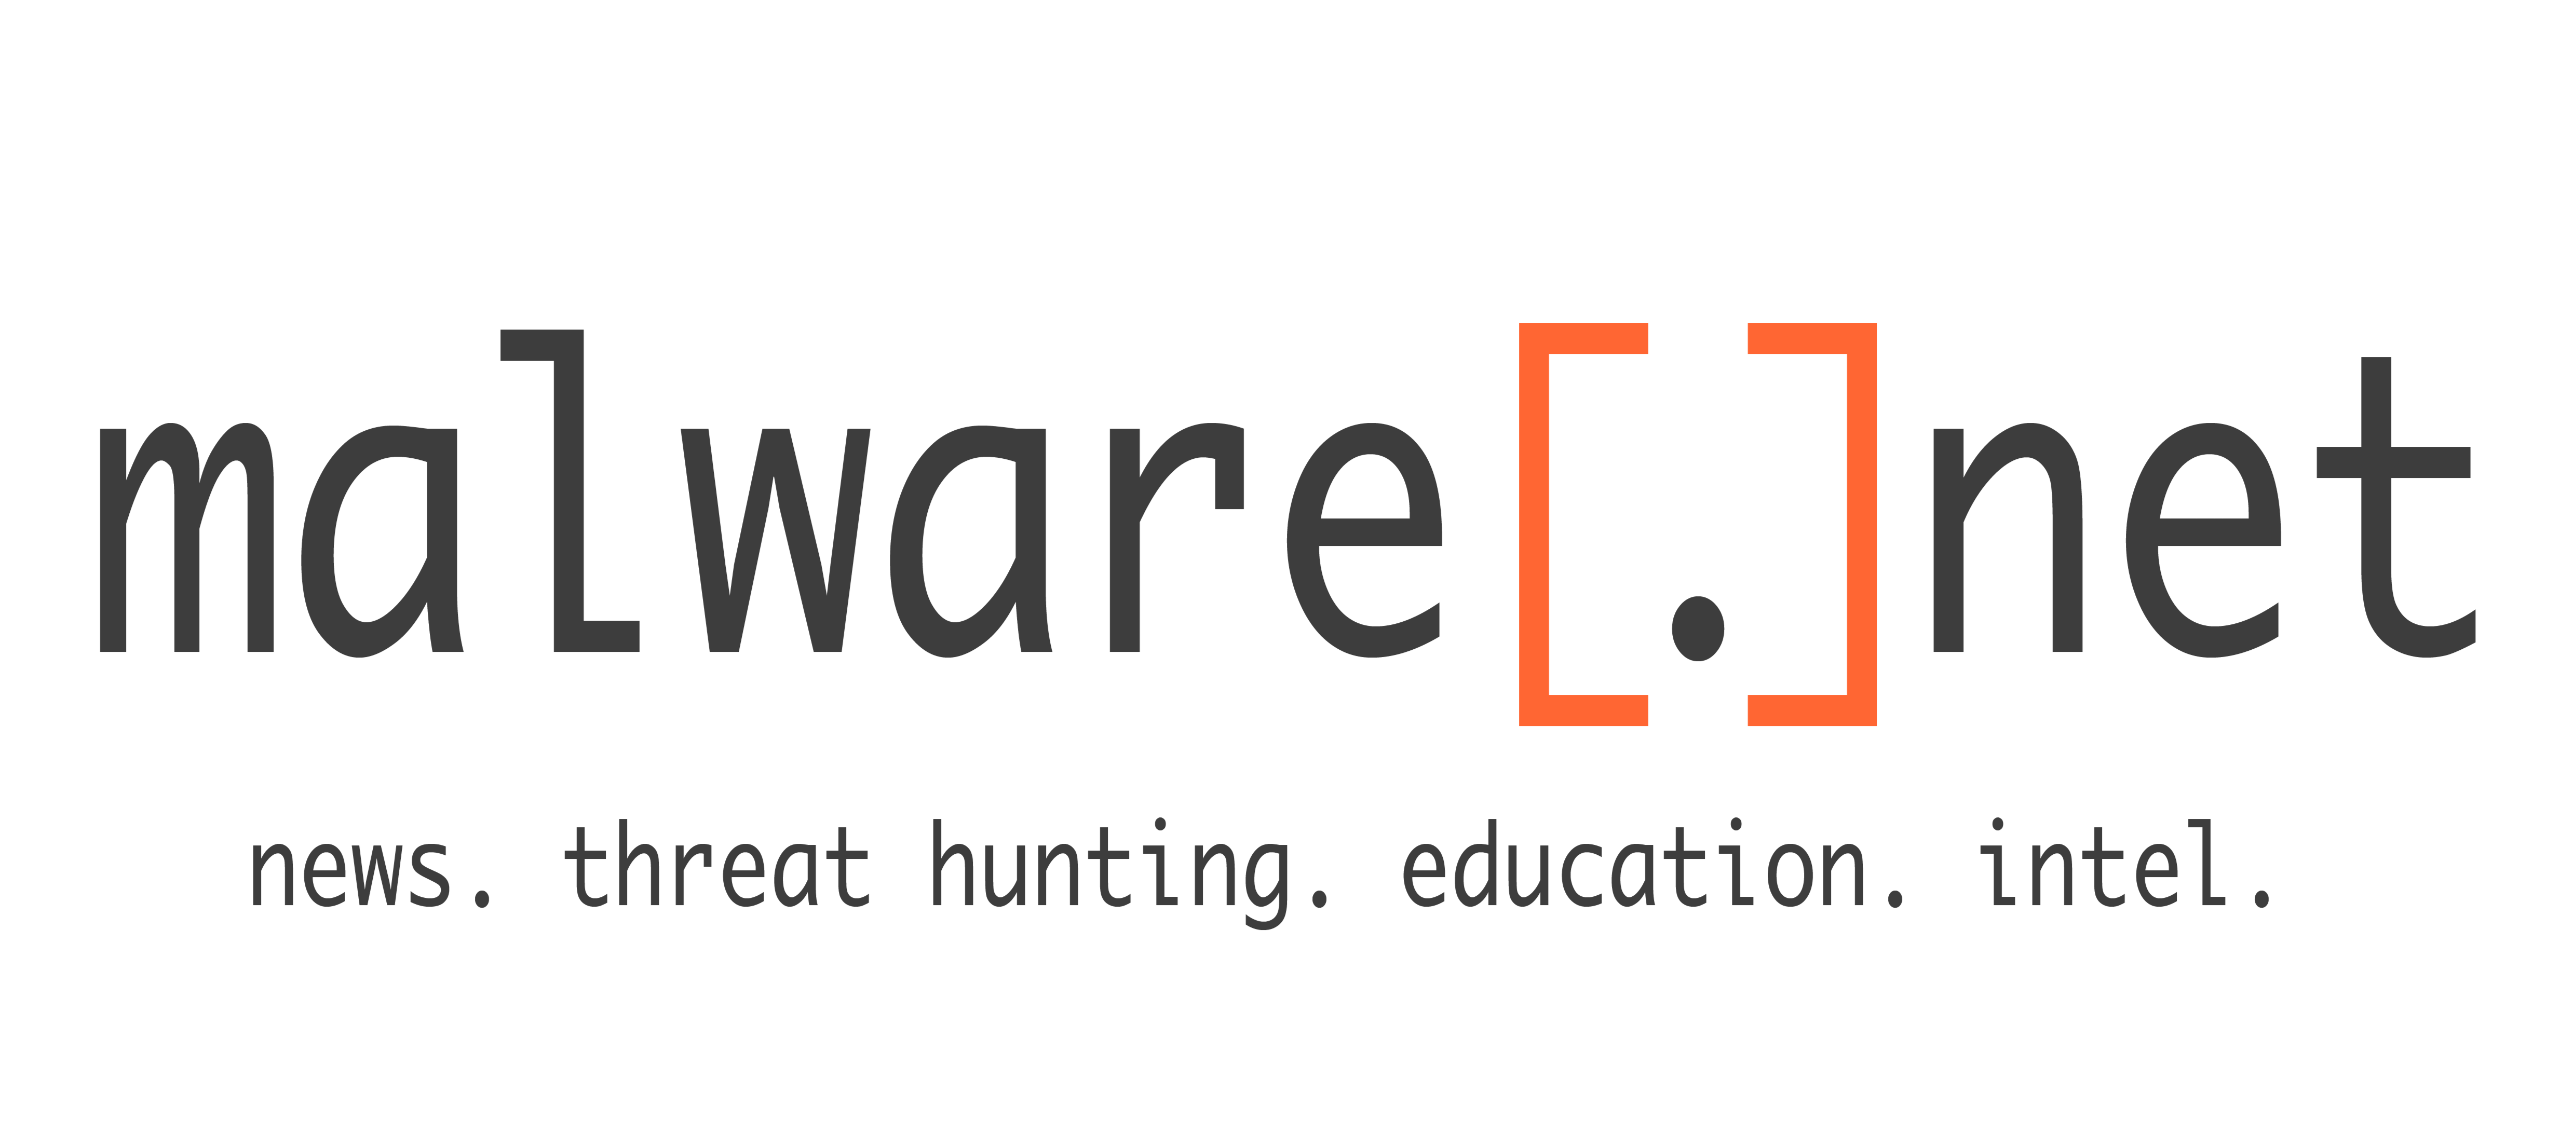 malware[.]net logo